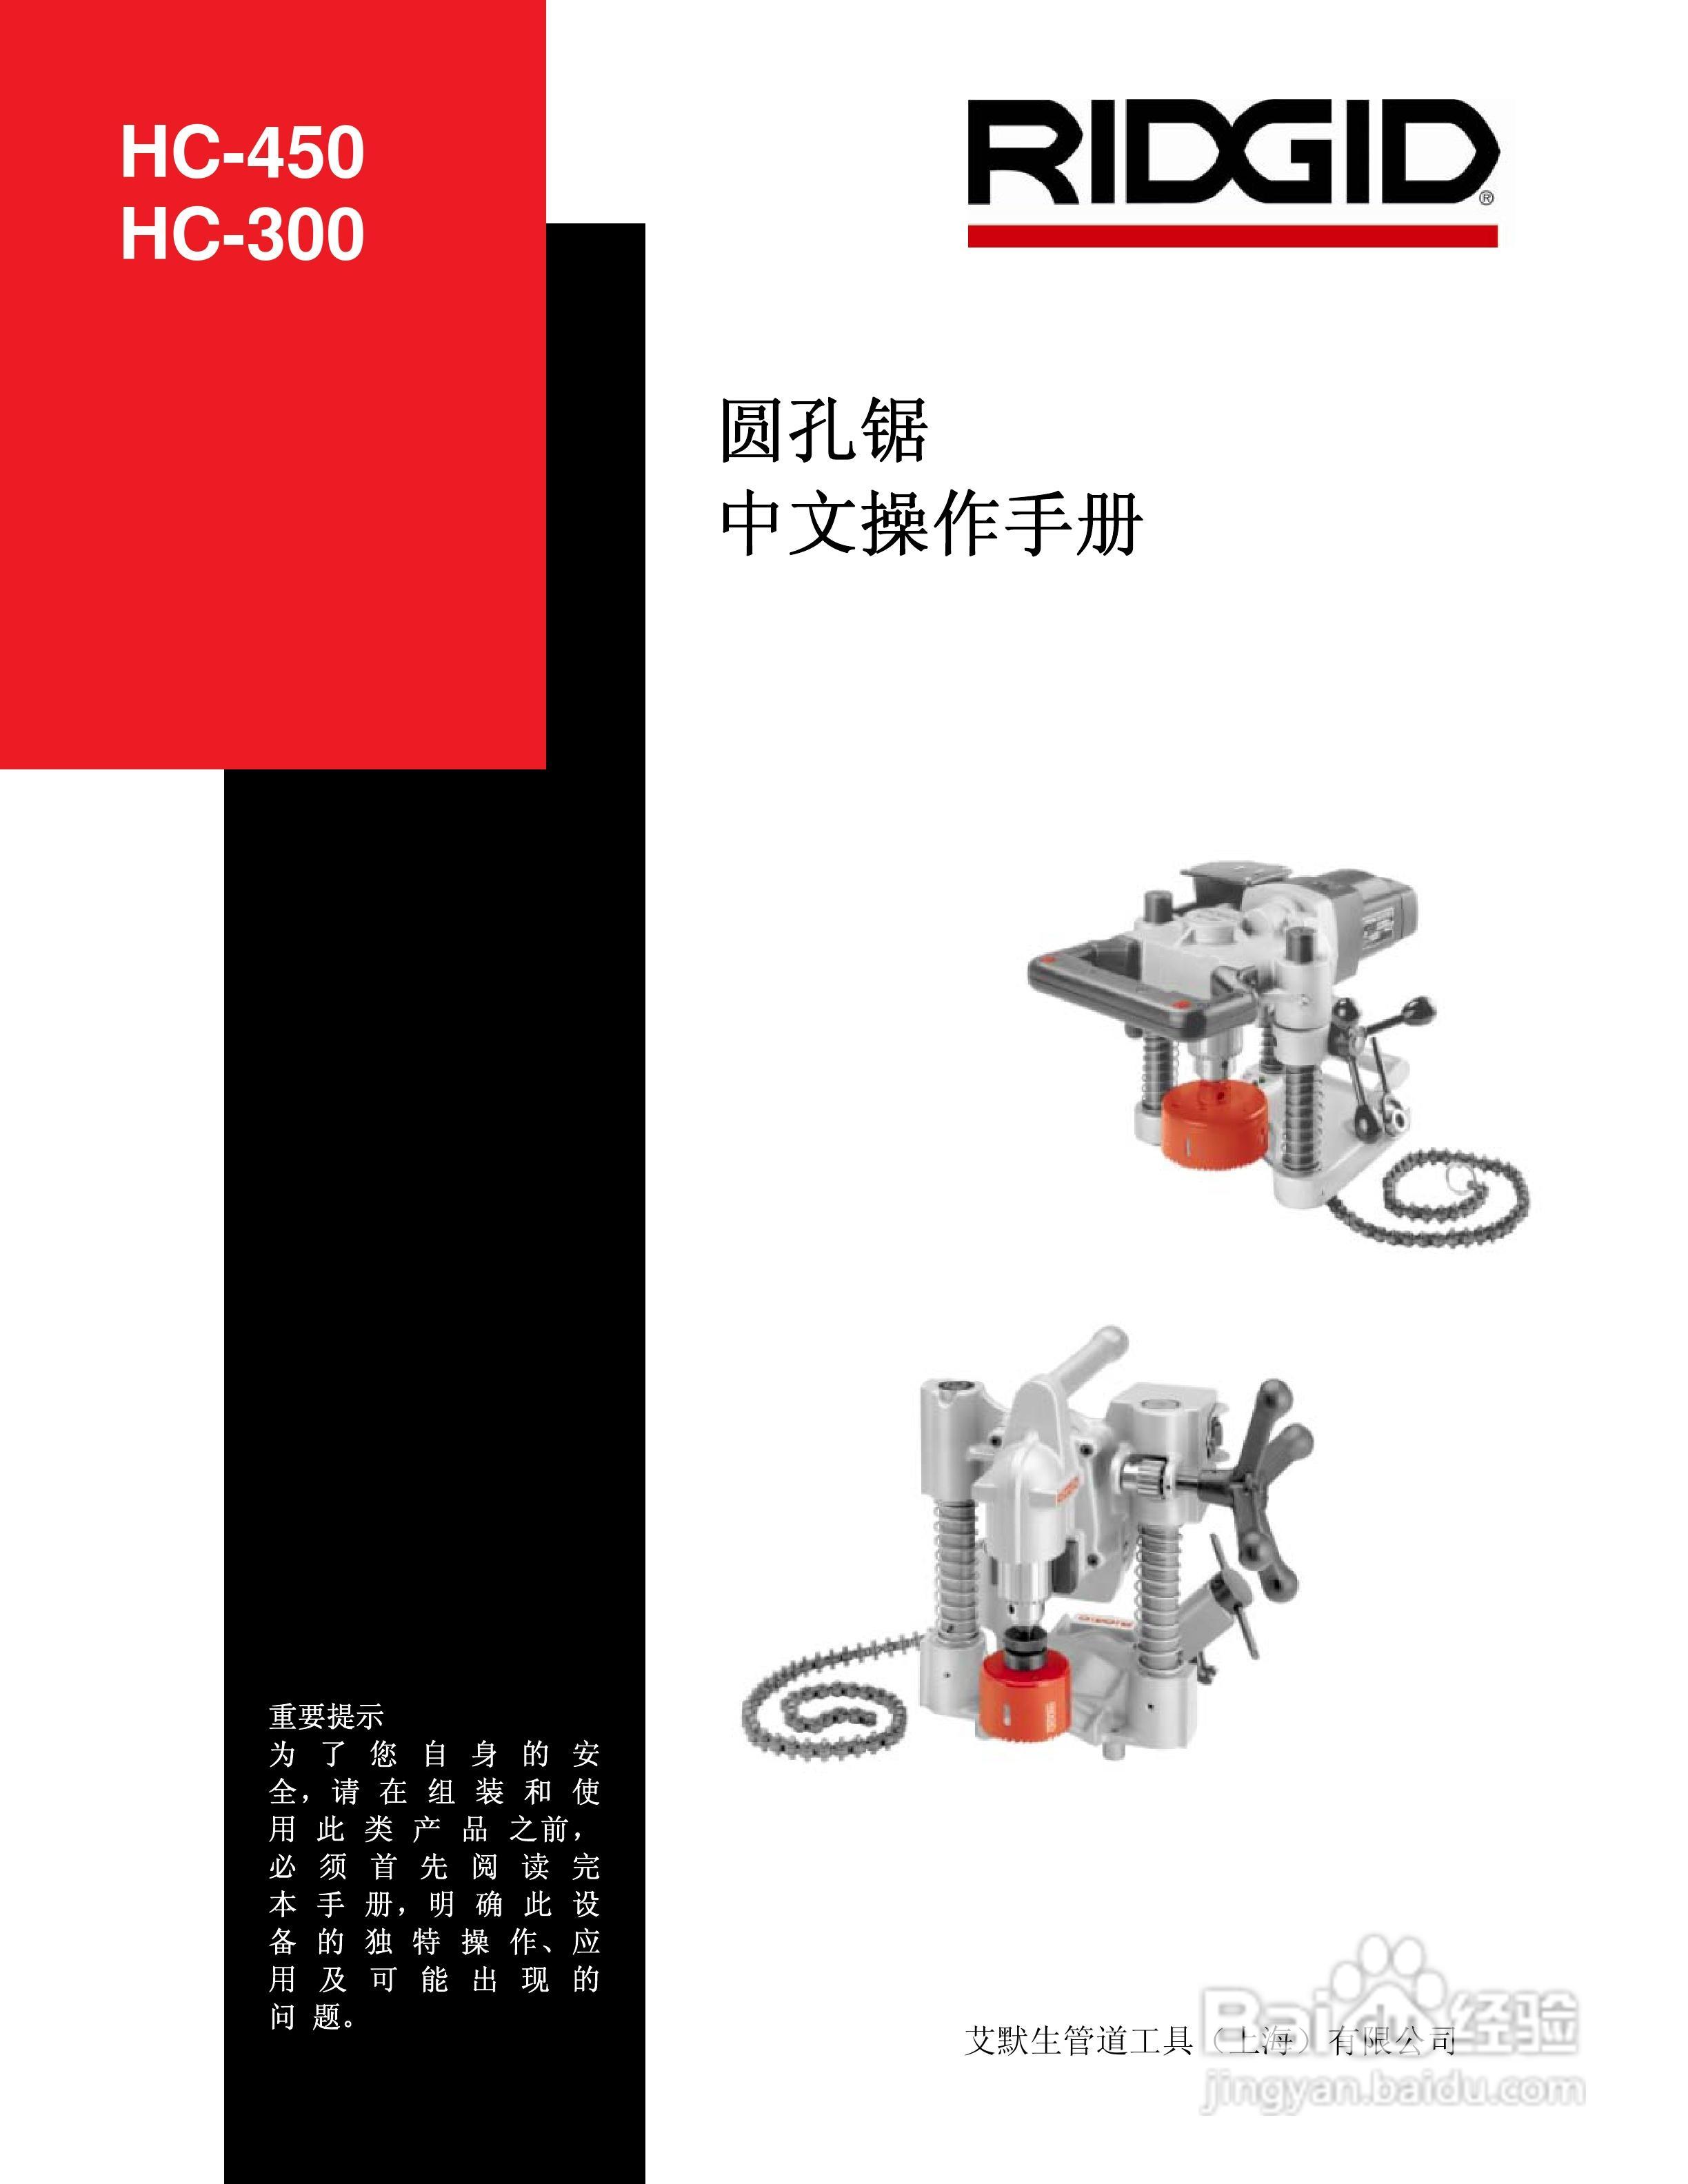 RIDGID HC-450/HC-300圆孔锯中文操作手册:[1]-百度经验